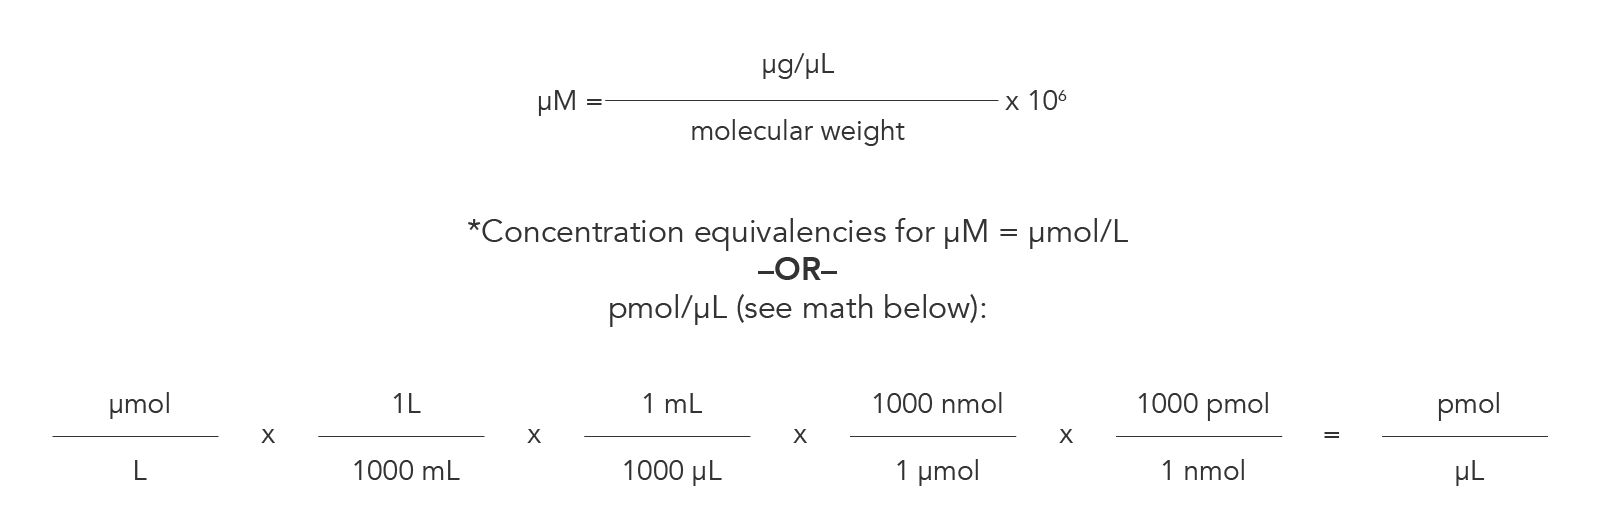 How to calculate oligo concentration in micromoles (µmol) per liter.